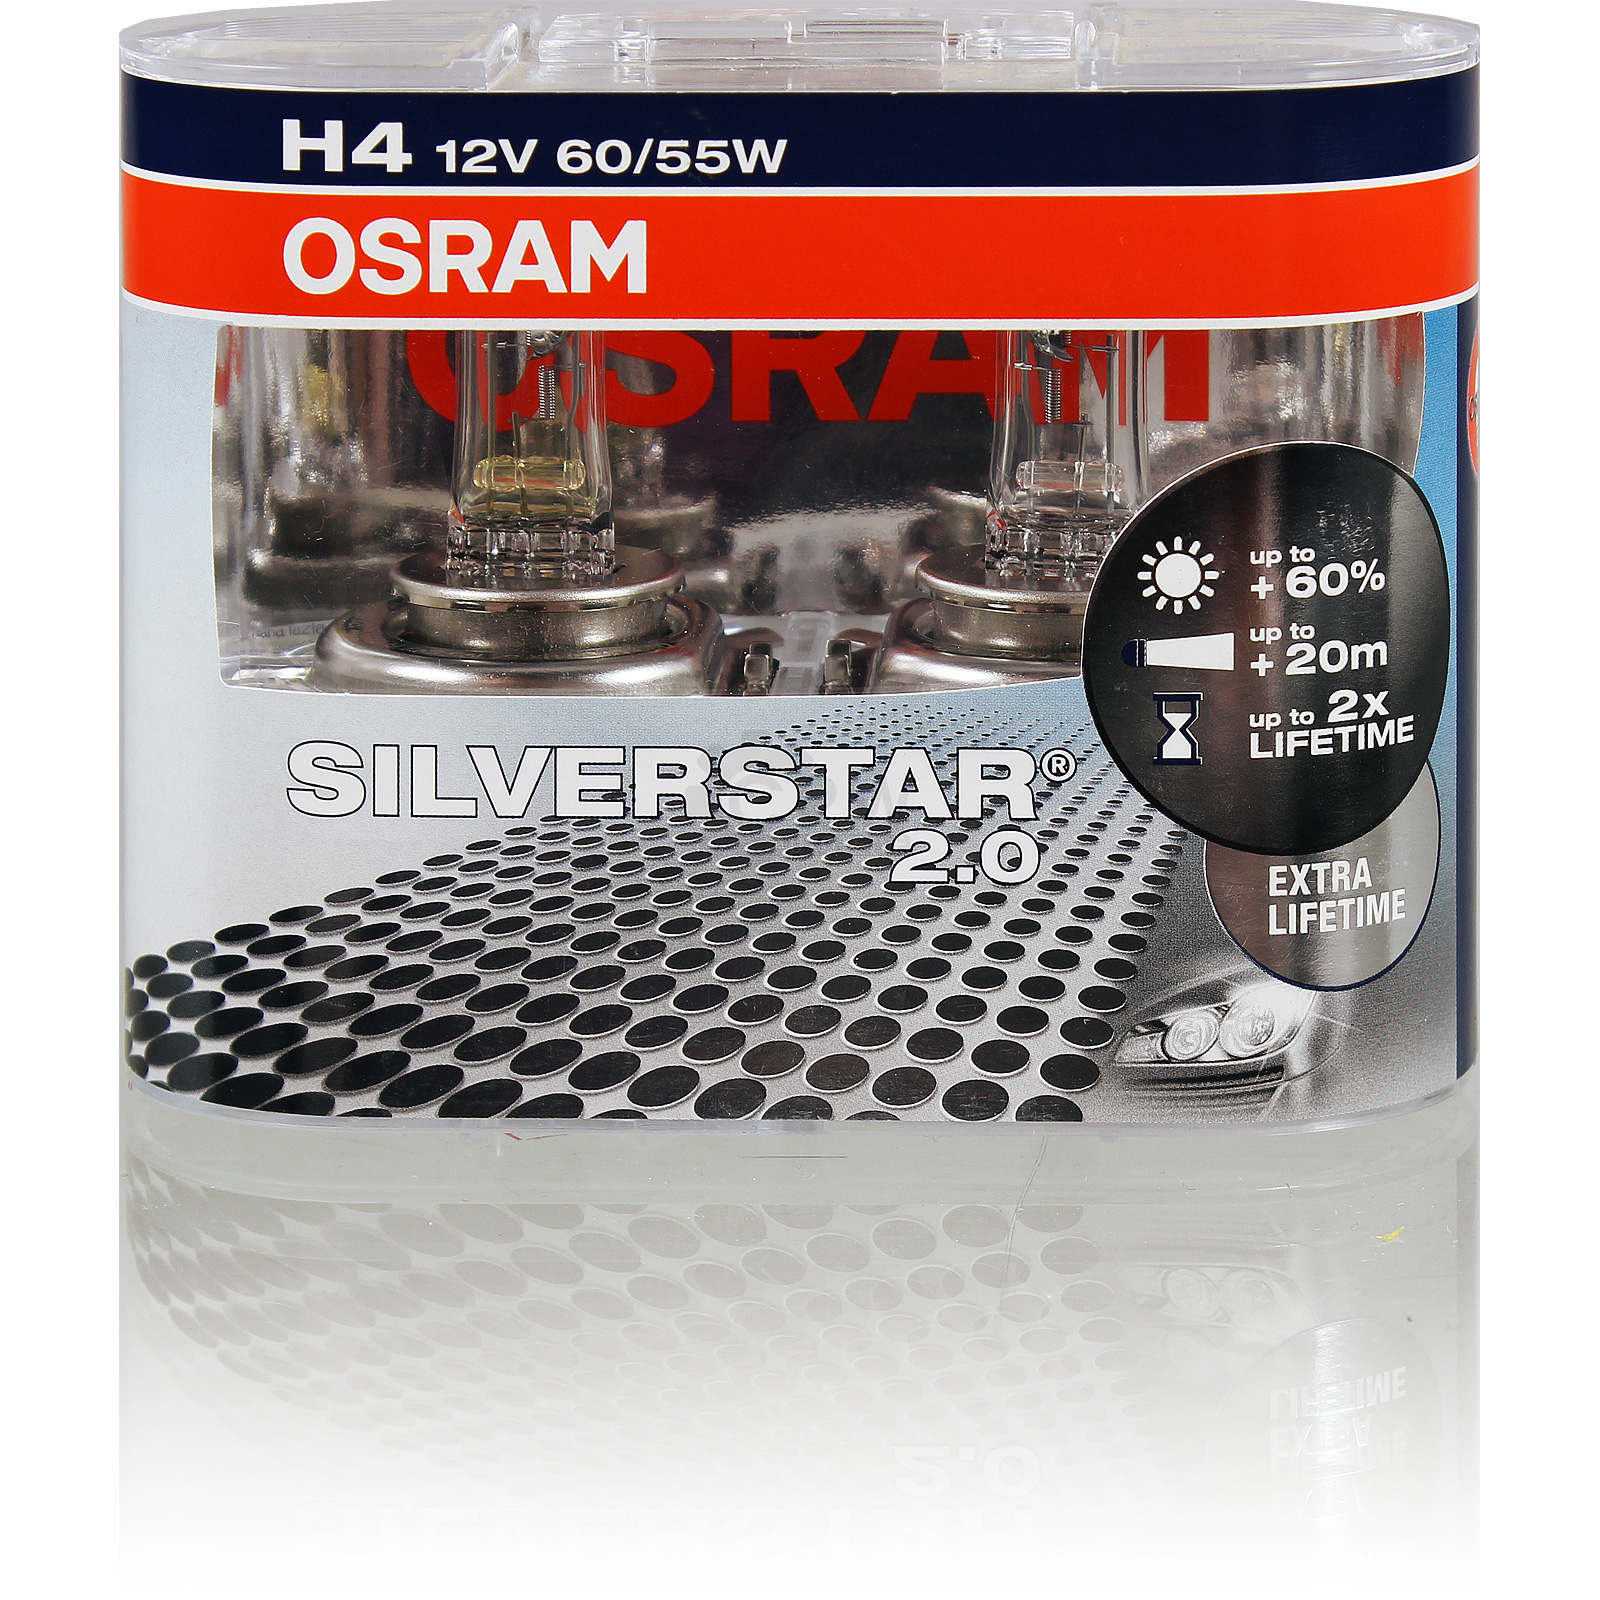 OSRAM SilverStar 2.0 +60% DUO Pack H4 Halogen 12V 60/55W P43t